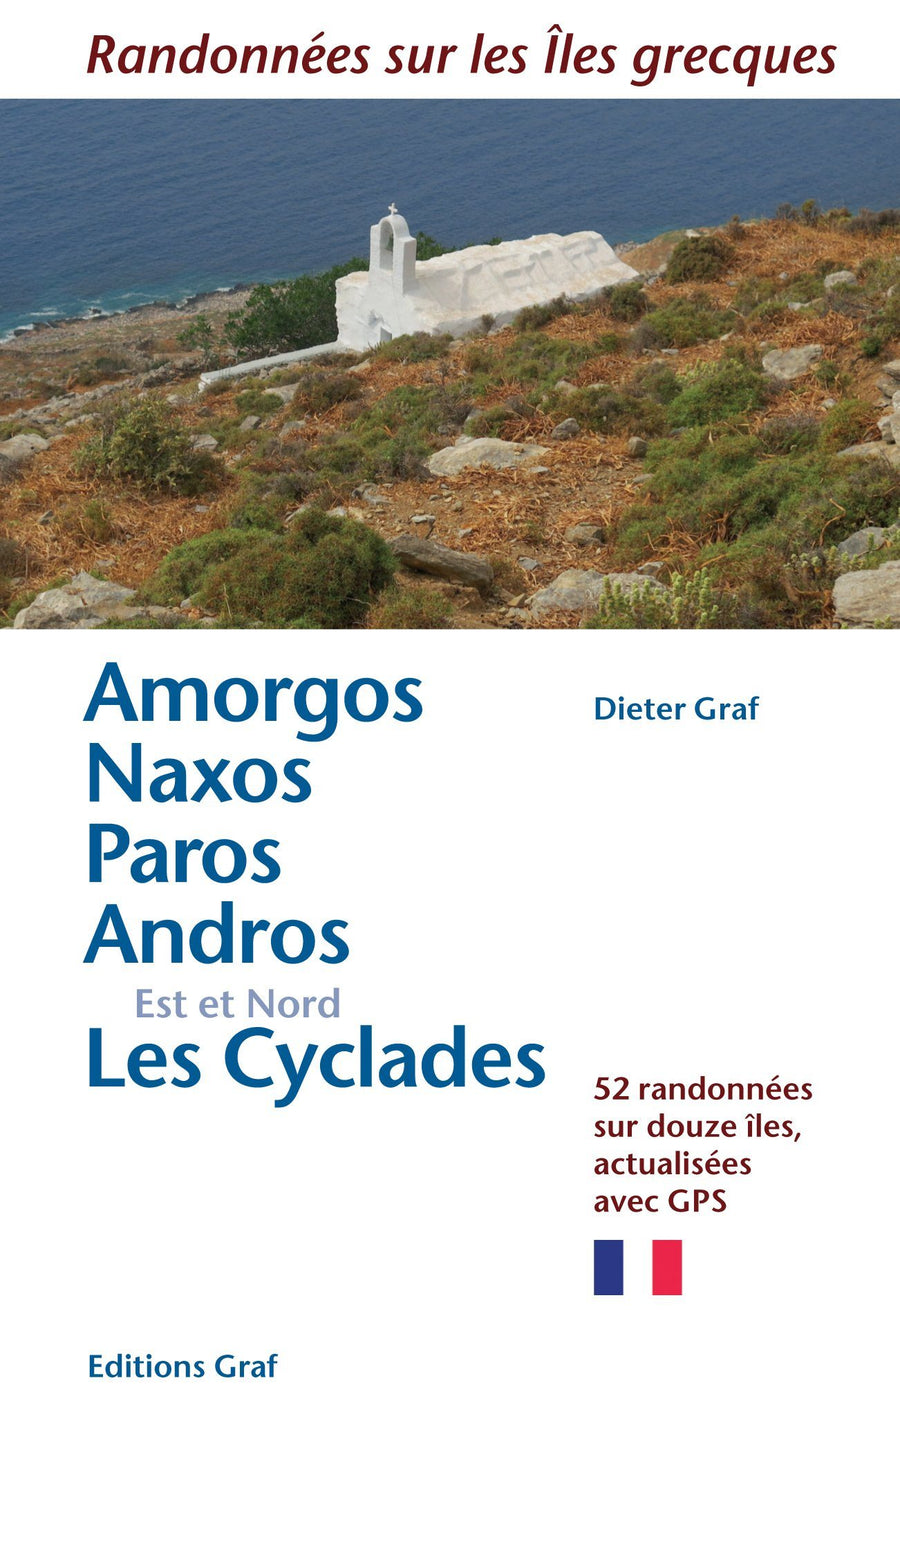 Guide de randonnées - Amorgos, Naxos, Paros, Andros, Est & Nord des Cyclades | Graf Editions guide de randonnée Graf Editions 